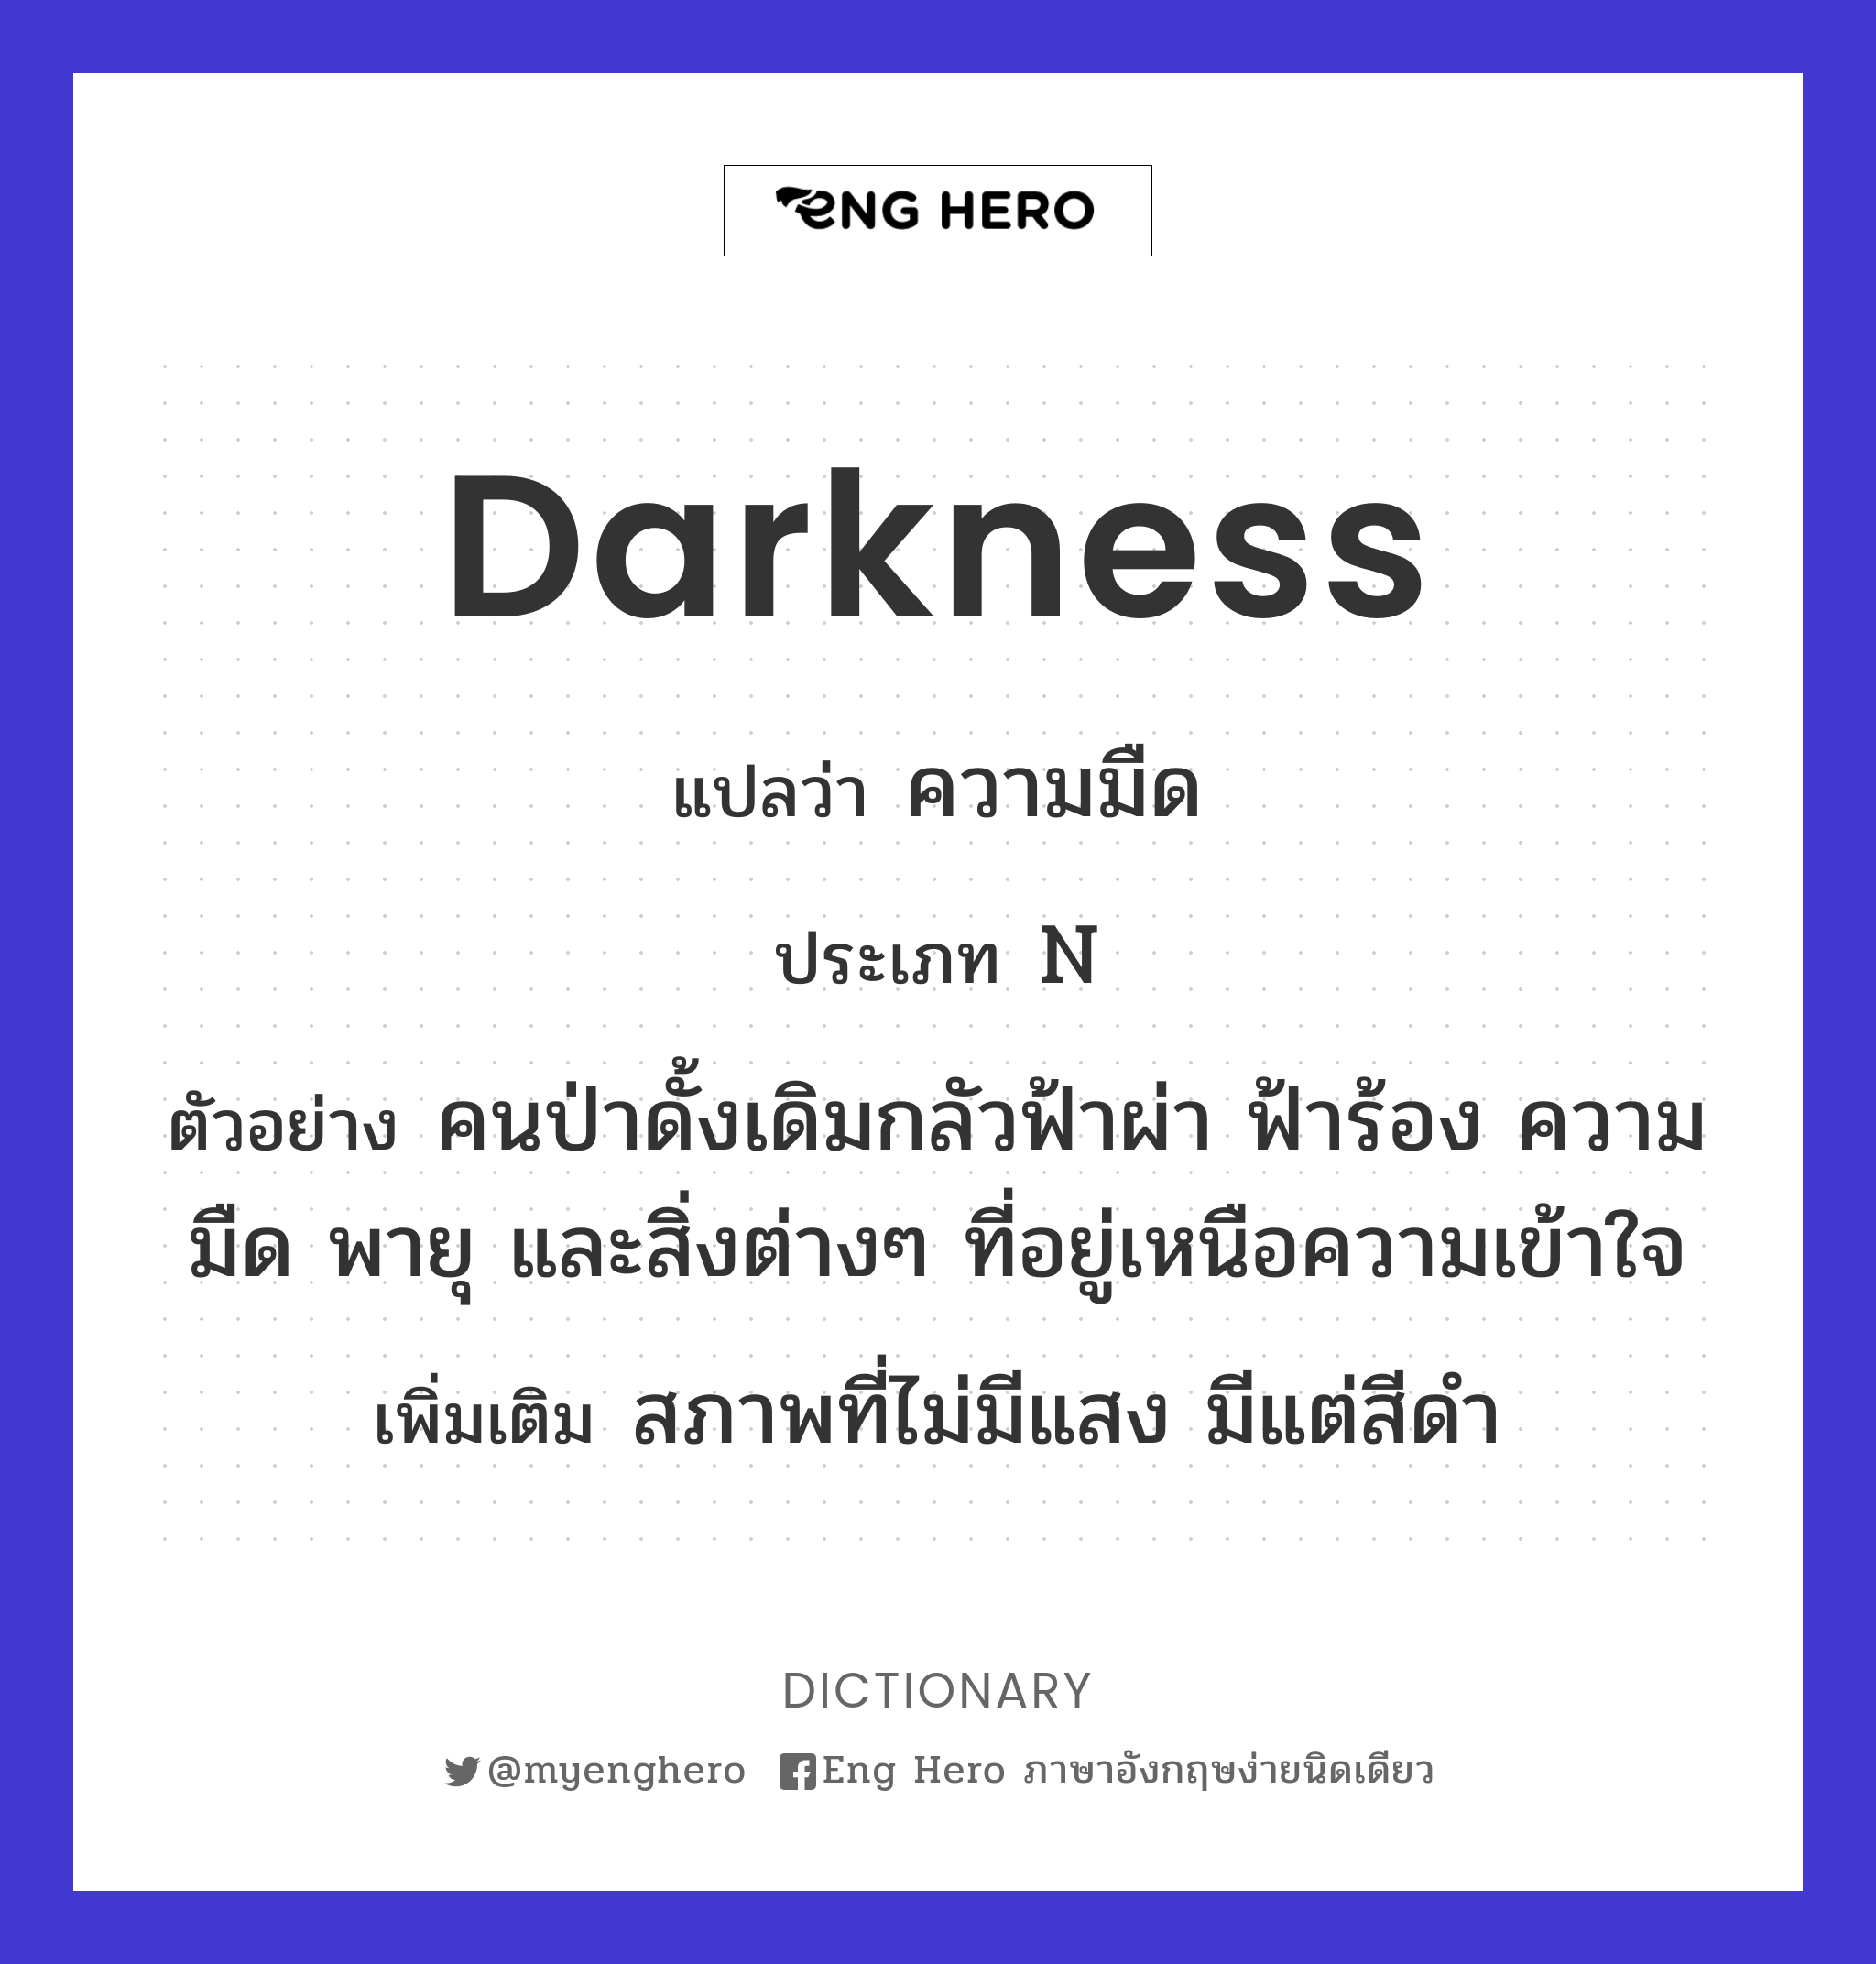 darkness